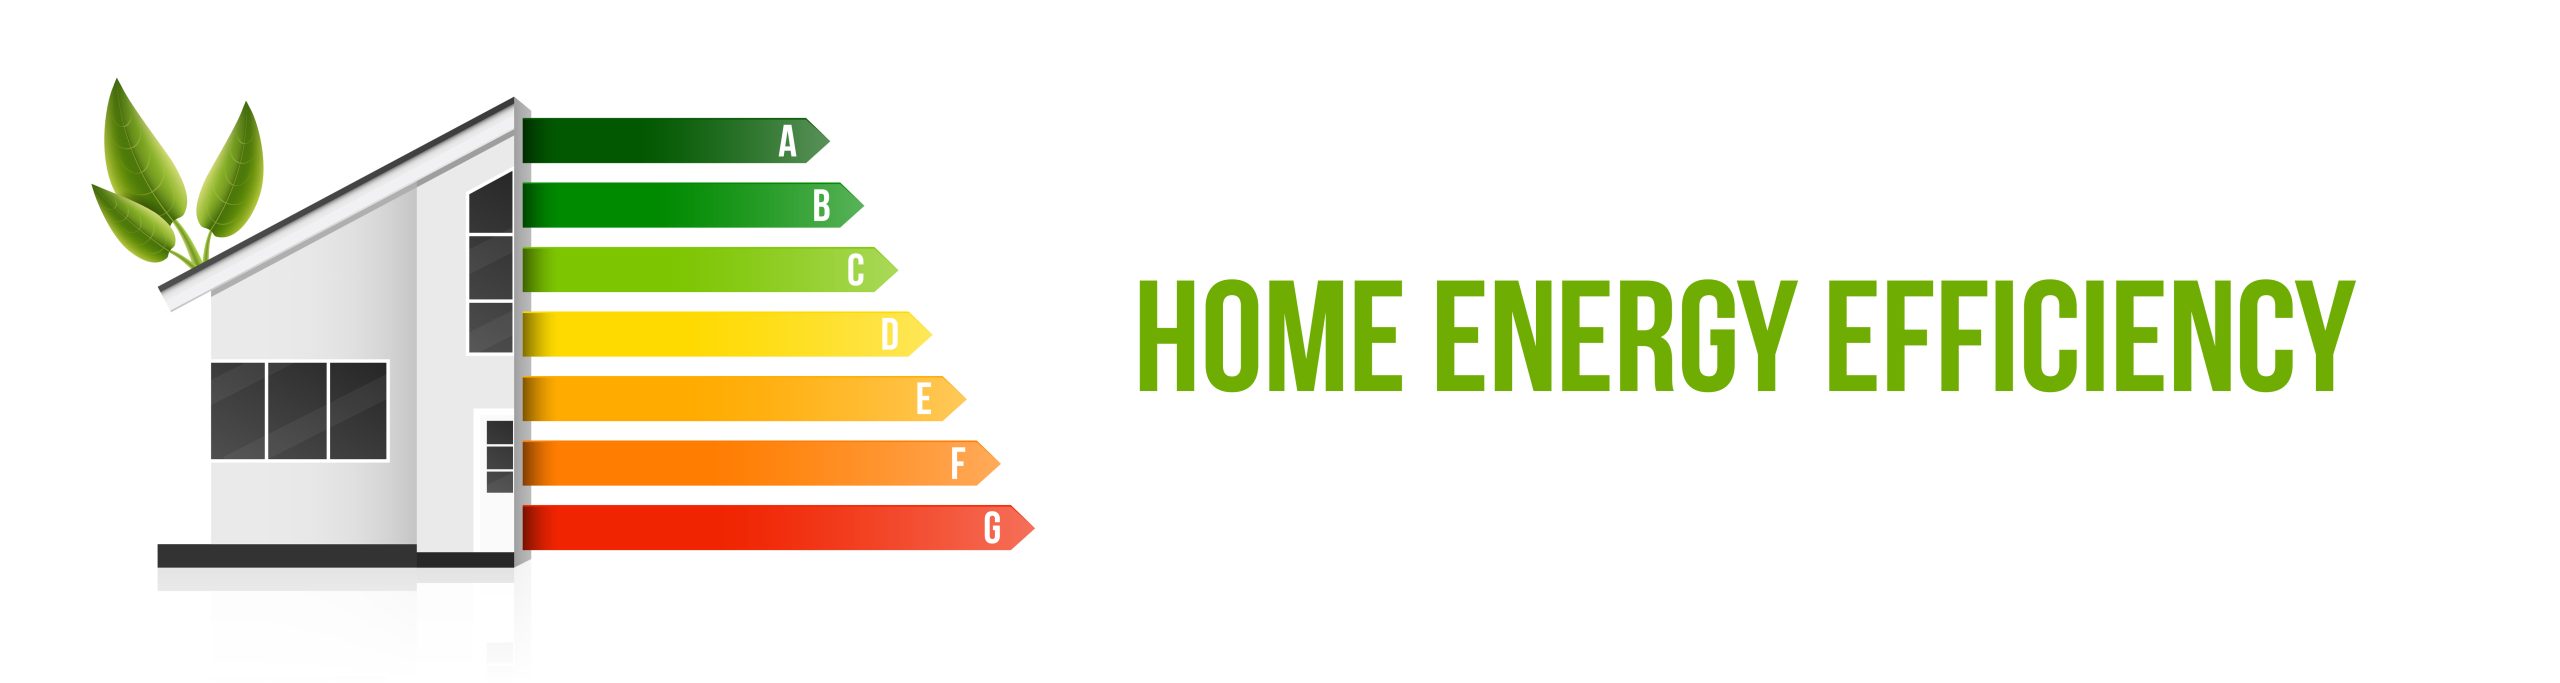 Home Energy Efficiency Survey